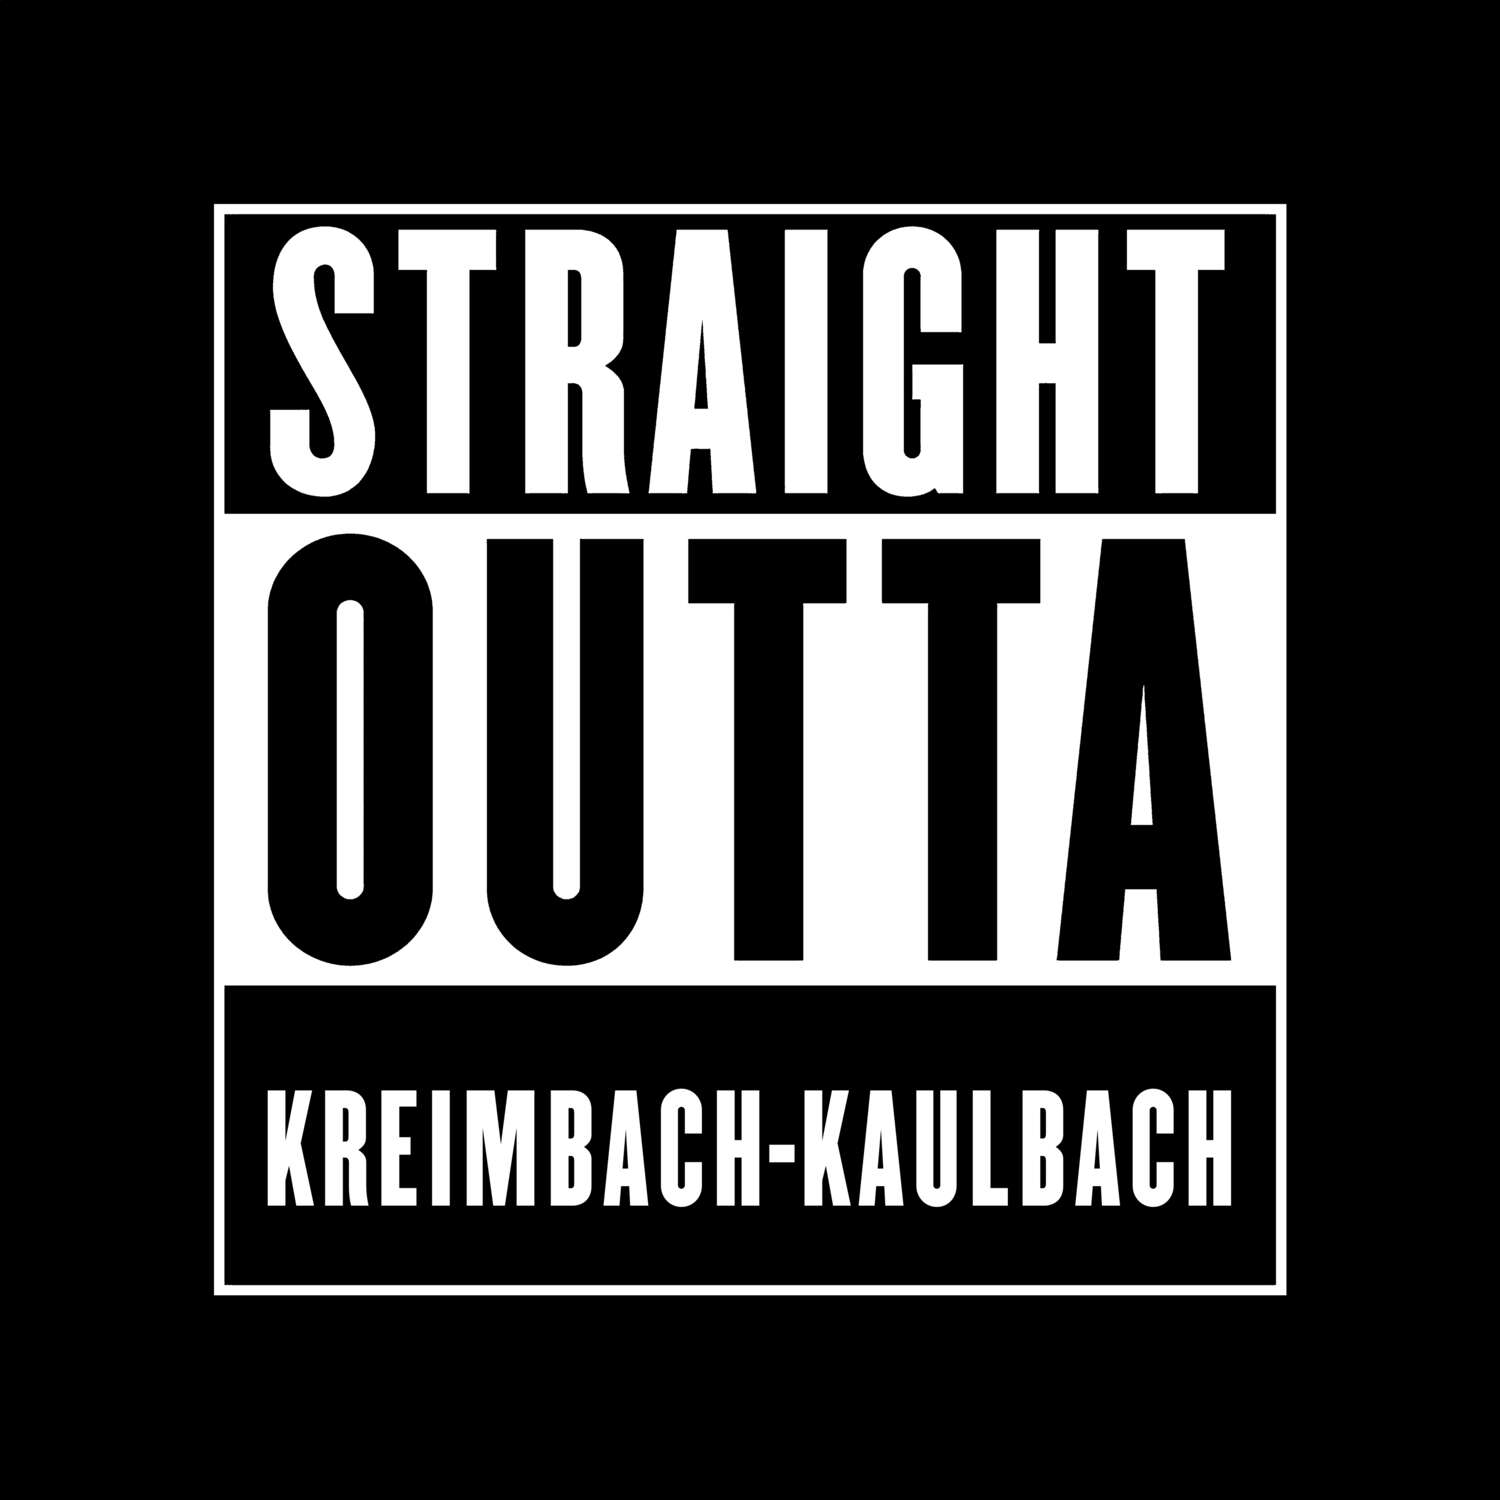 Kreimbach-Kaulbach T-Shirt »Straight Outta«